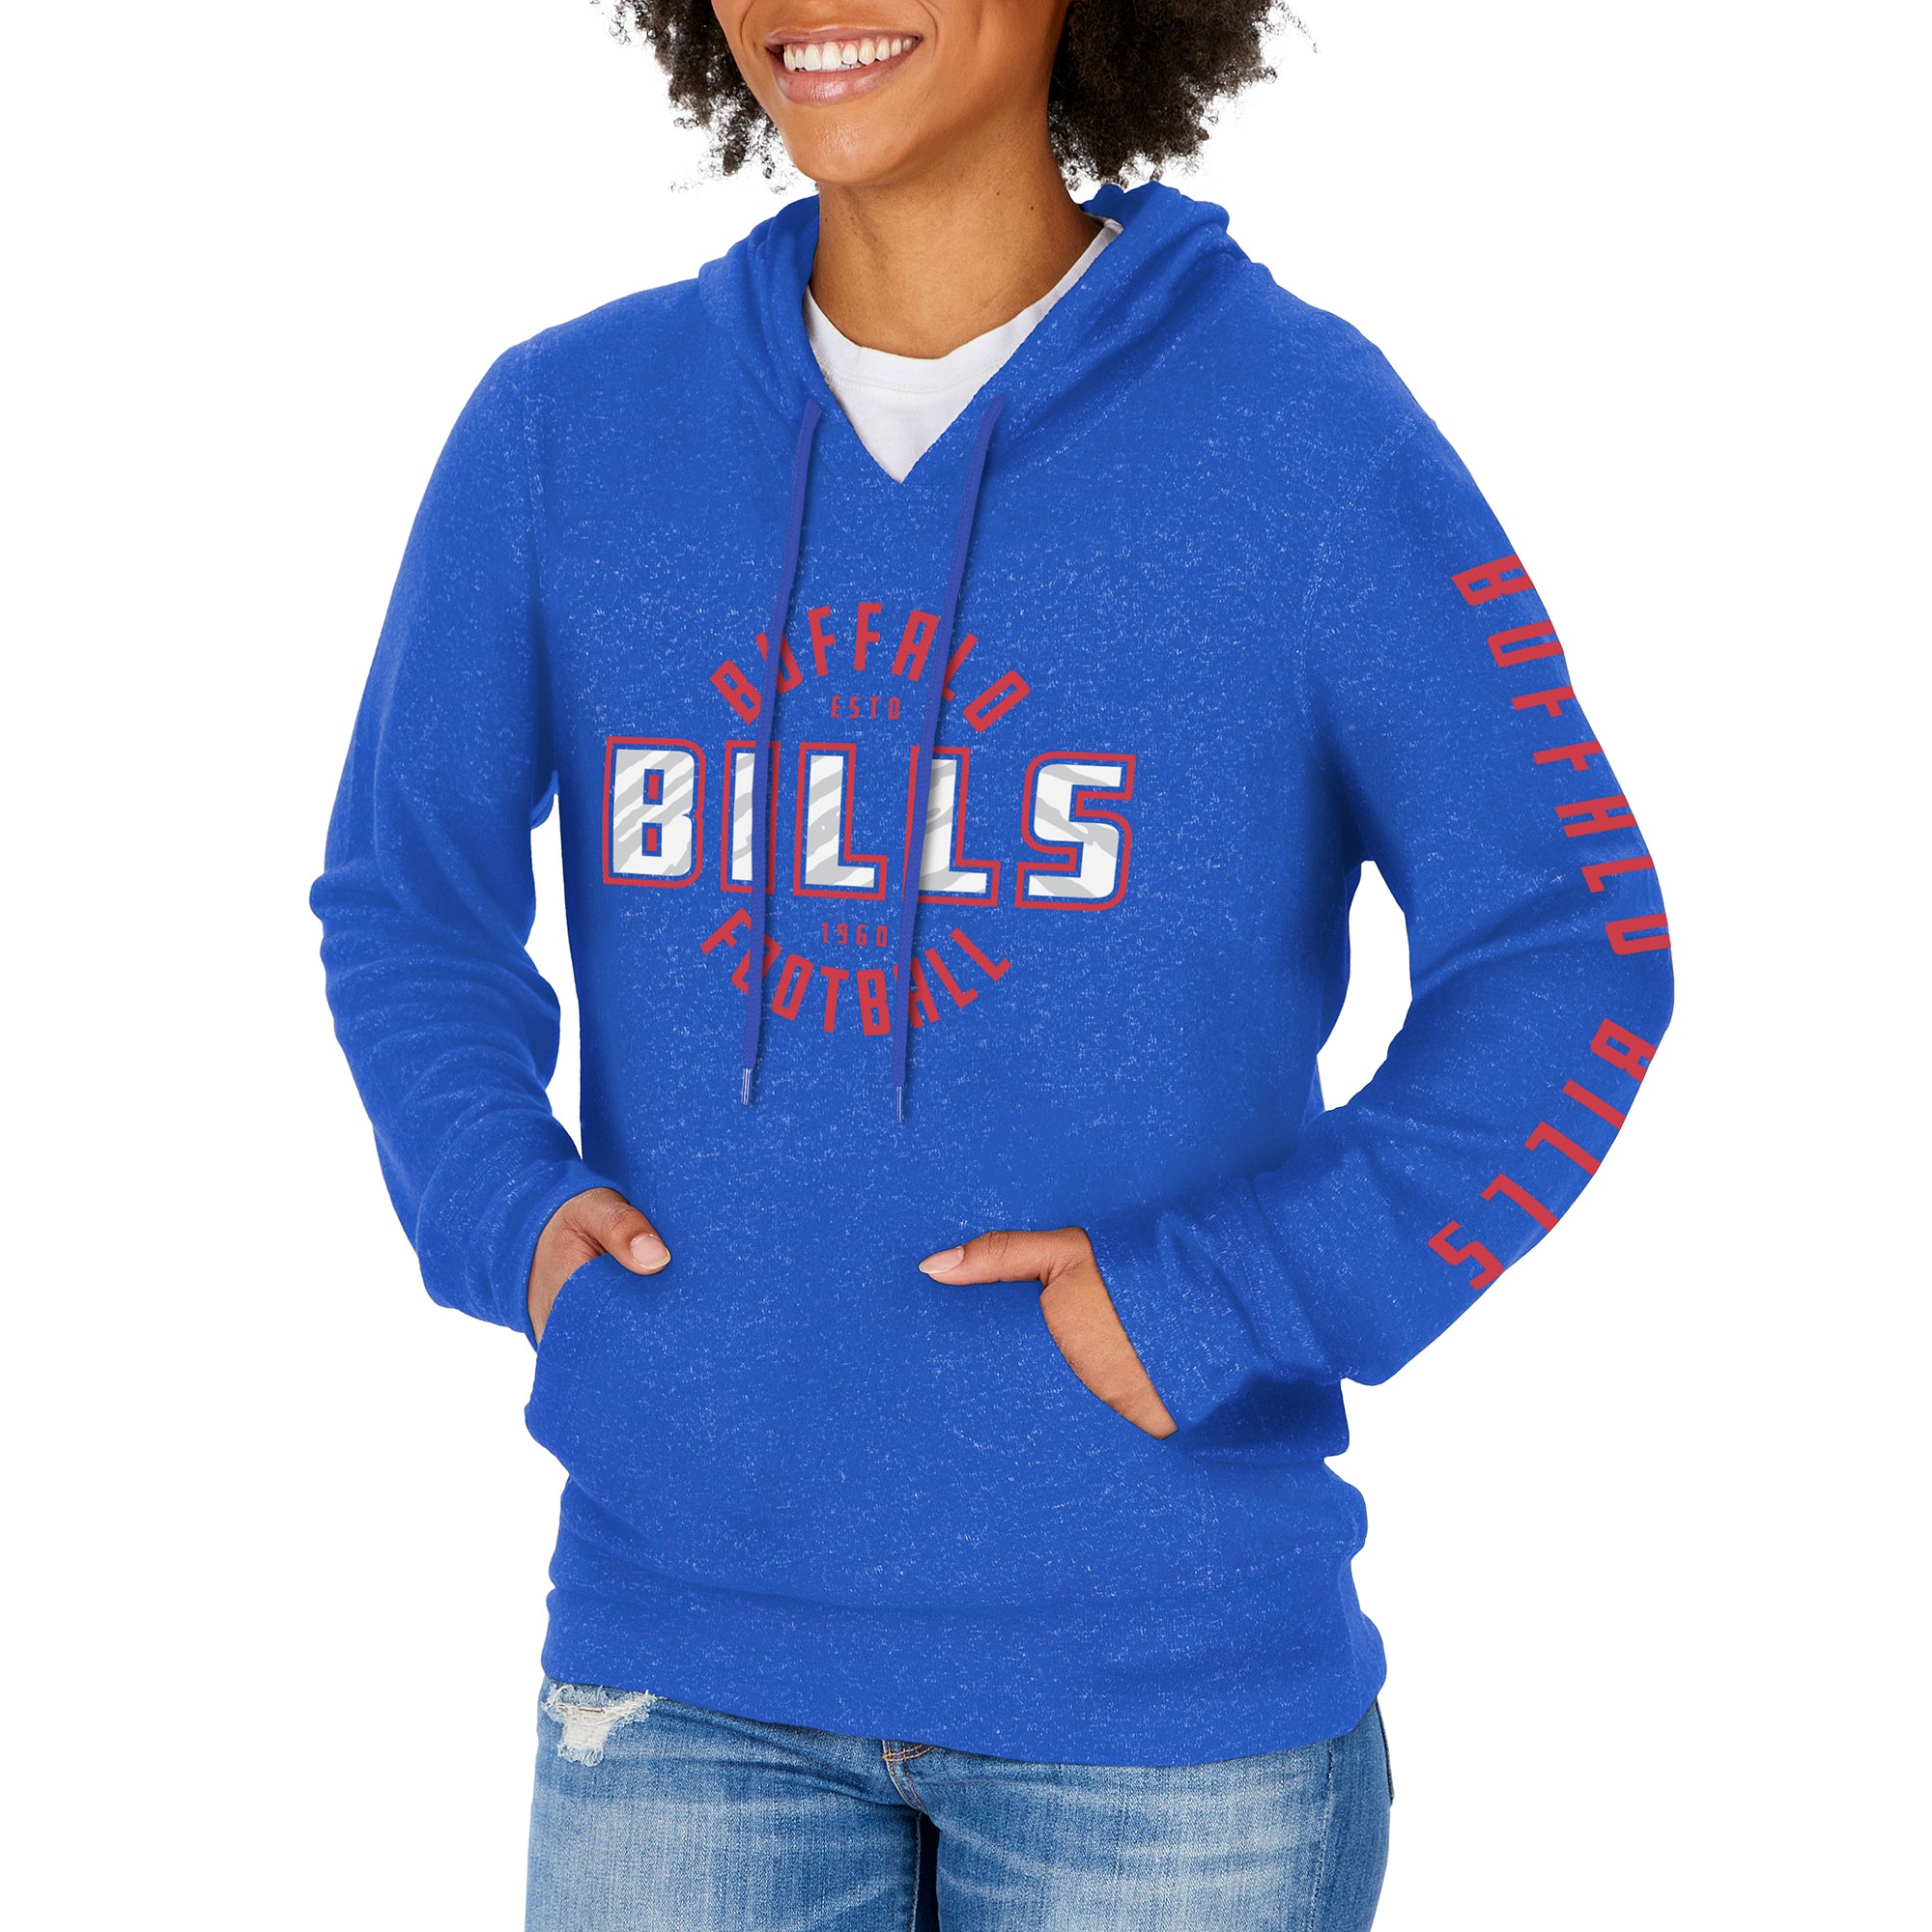 Zubaz NFL Womens Marled Soft Hoodie with Team Graphics, Buffalo Bills, Small